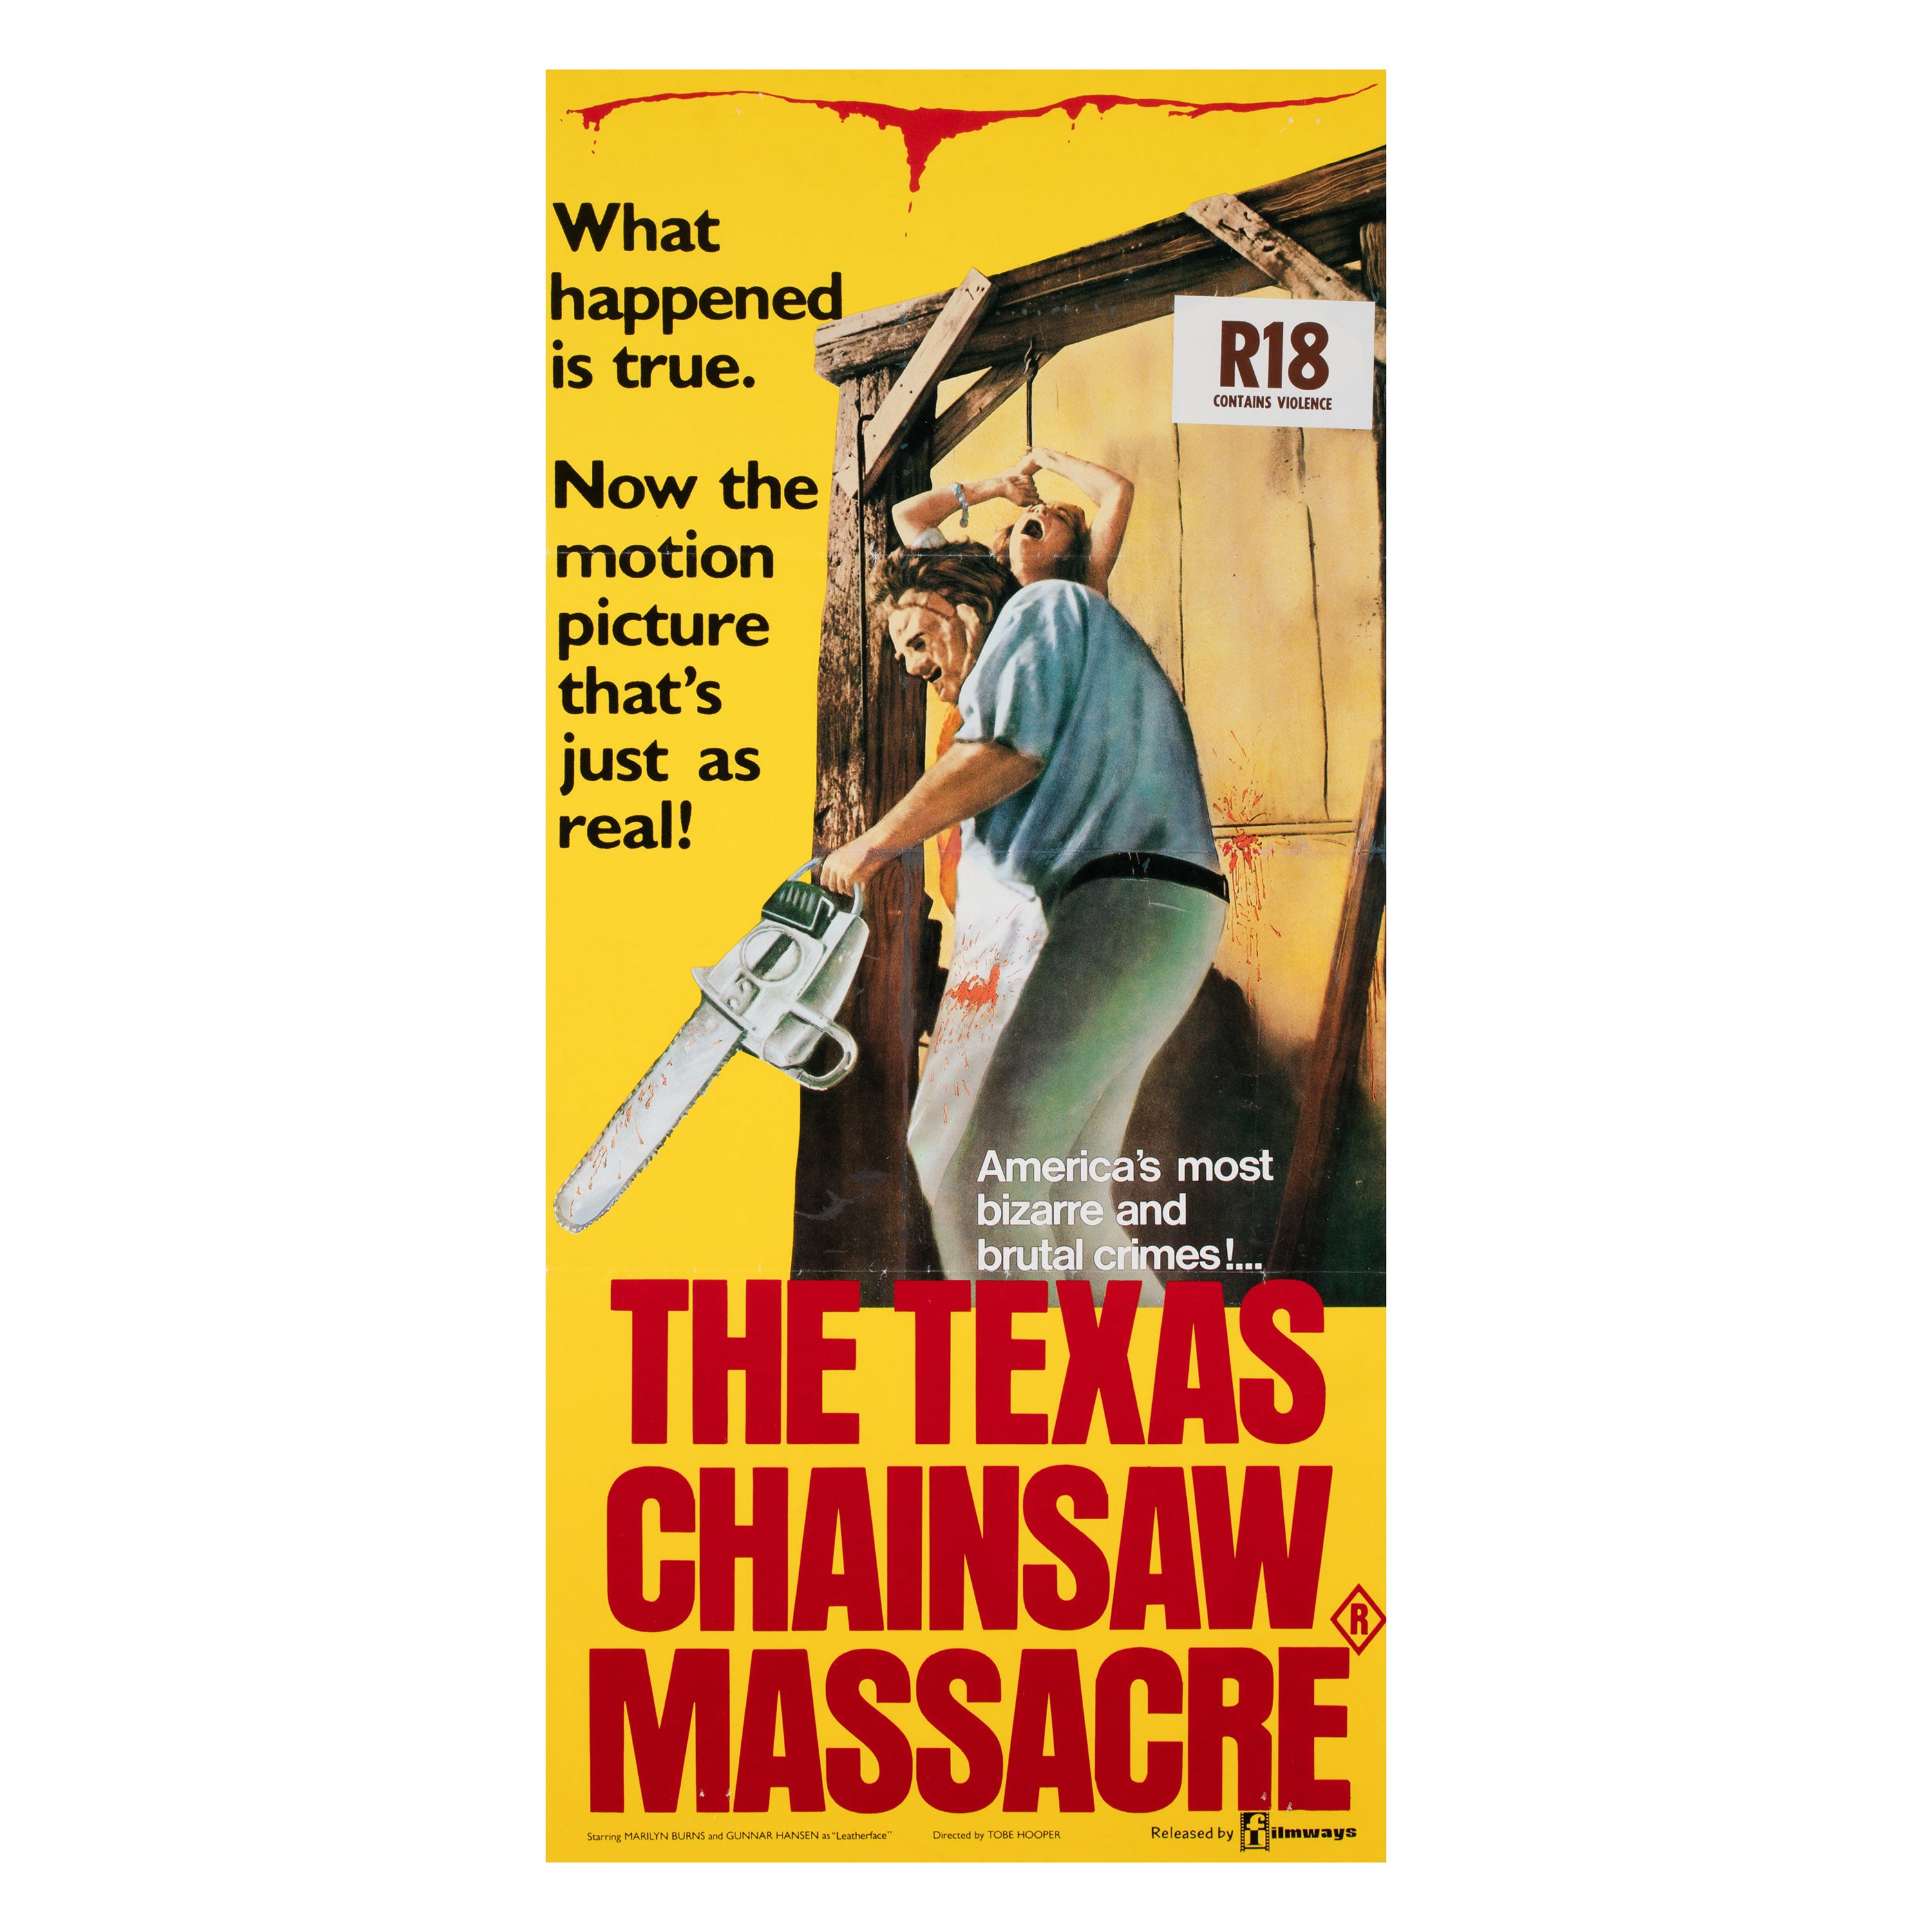 „THE TEXAS CHAINSAW MASSACRE“, australisches Daybill-Filmplakat, 1984